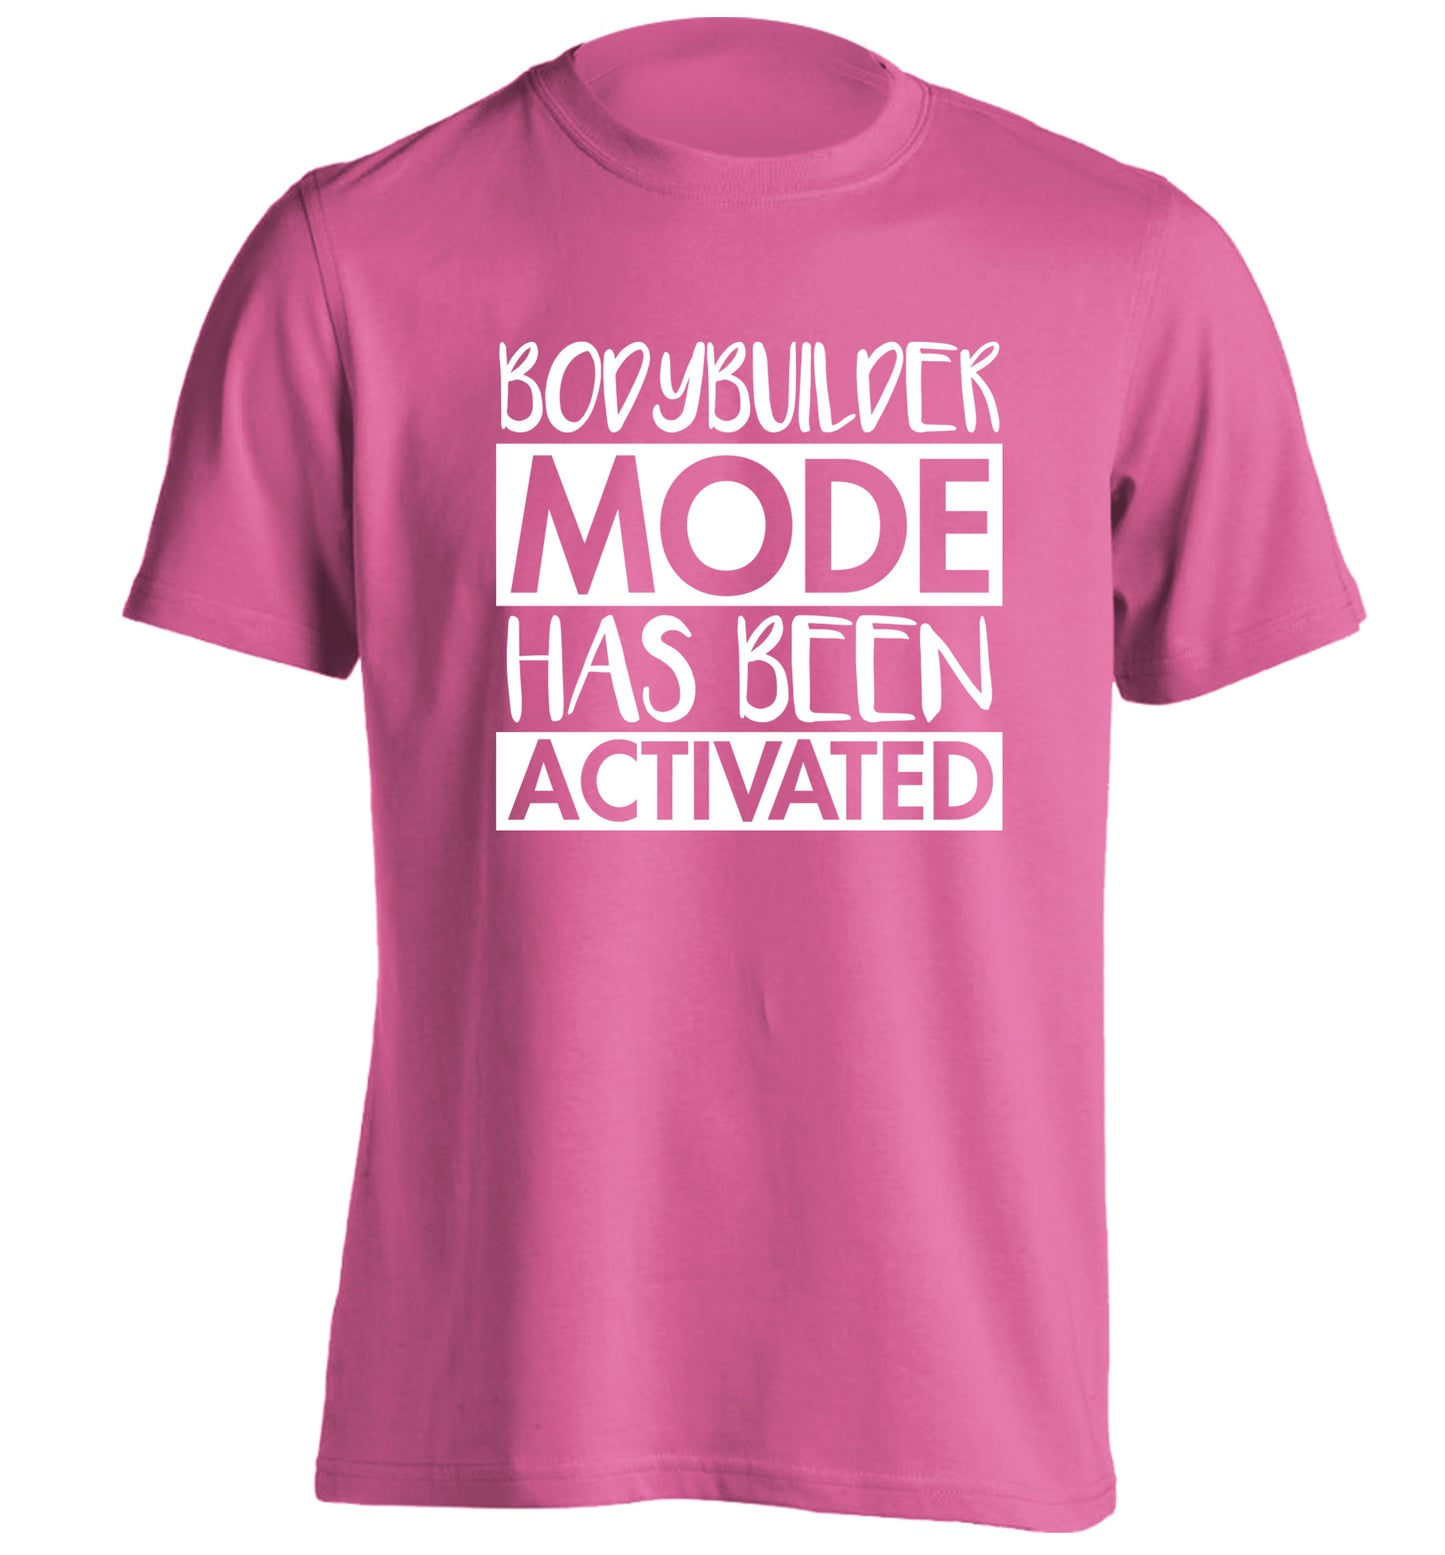 Bodybuilder mode activated adults unisex pink Tshirt 2XL